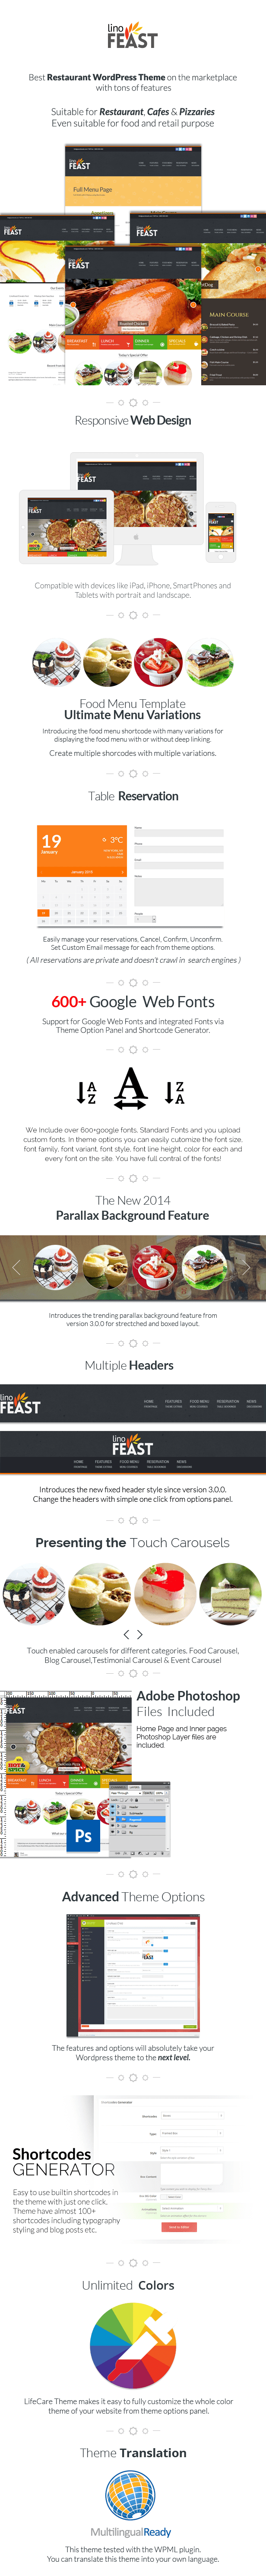 LinoFeast: Restaurant Responsive WordPress Theme - 5